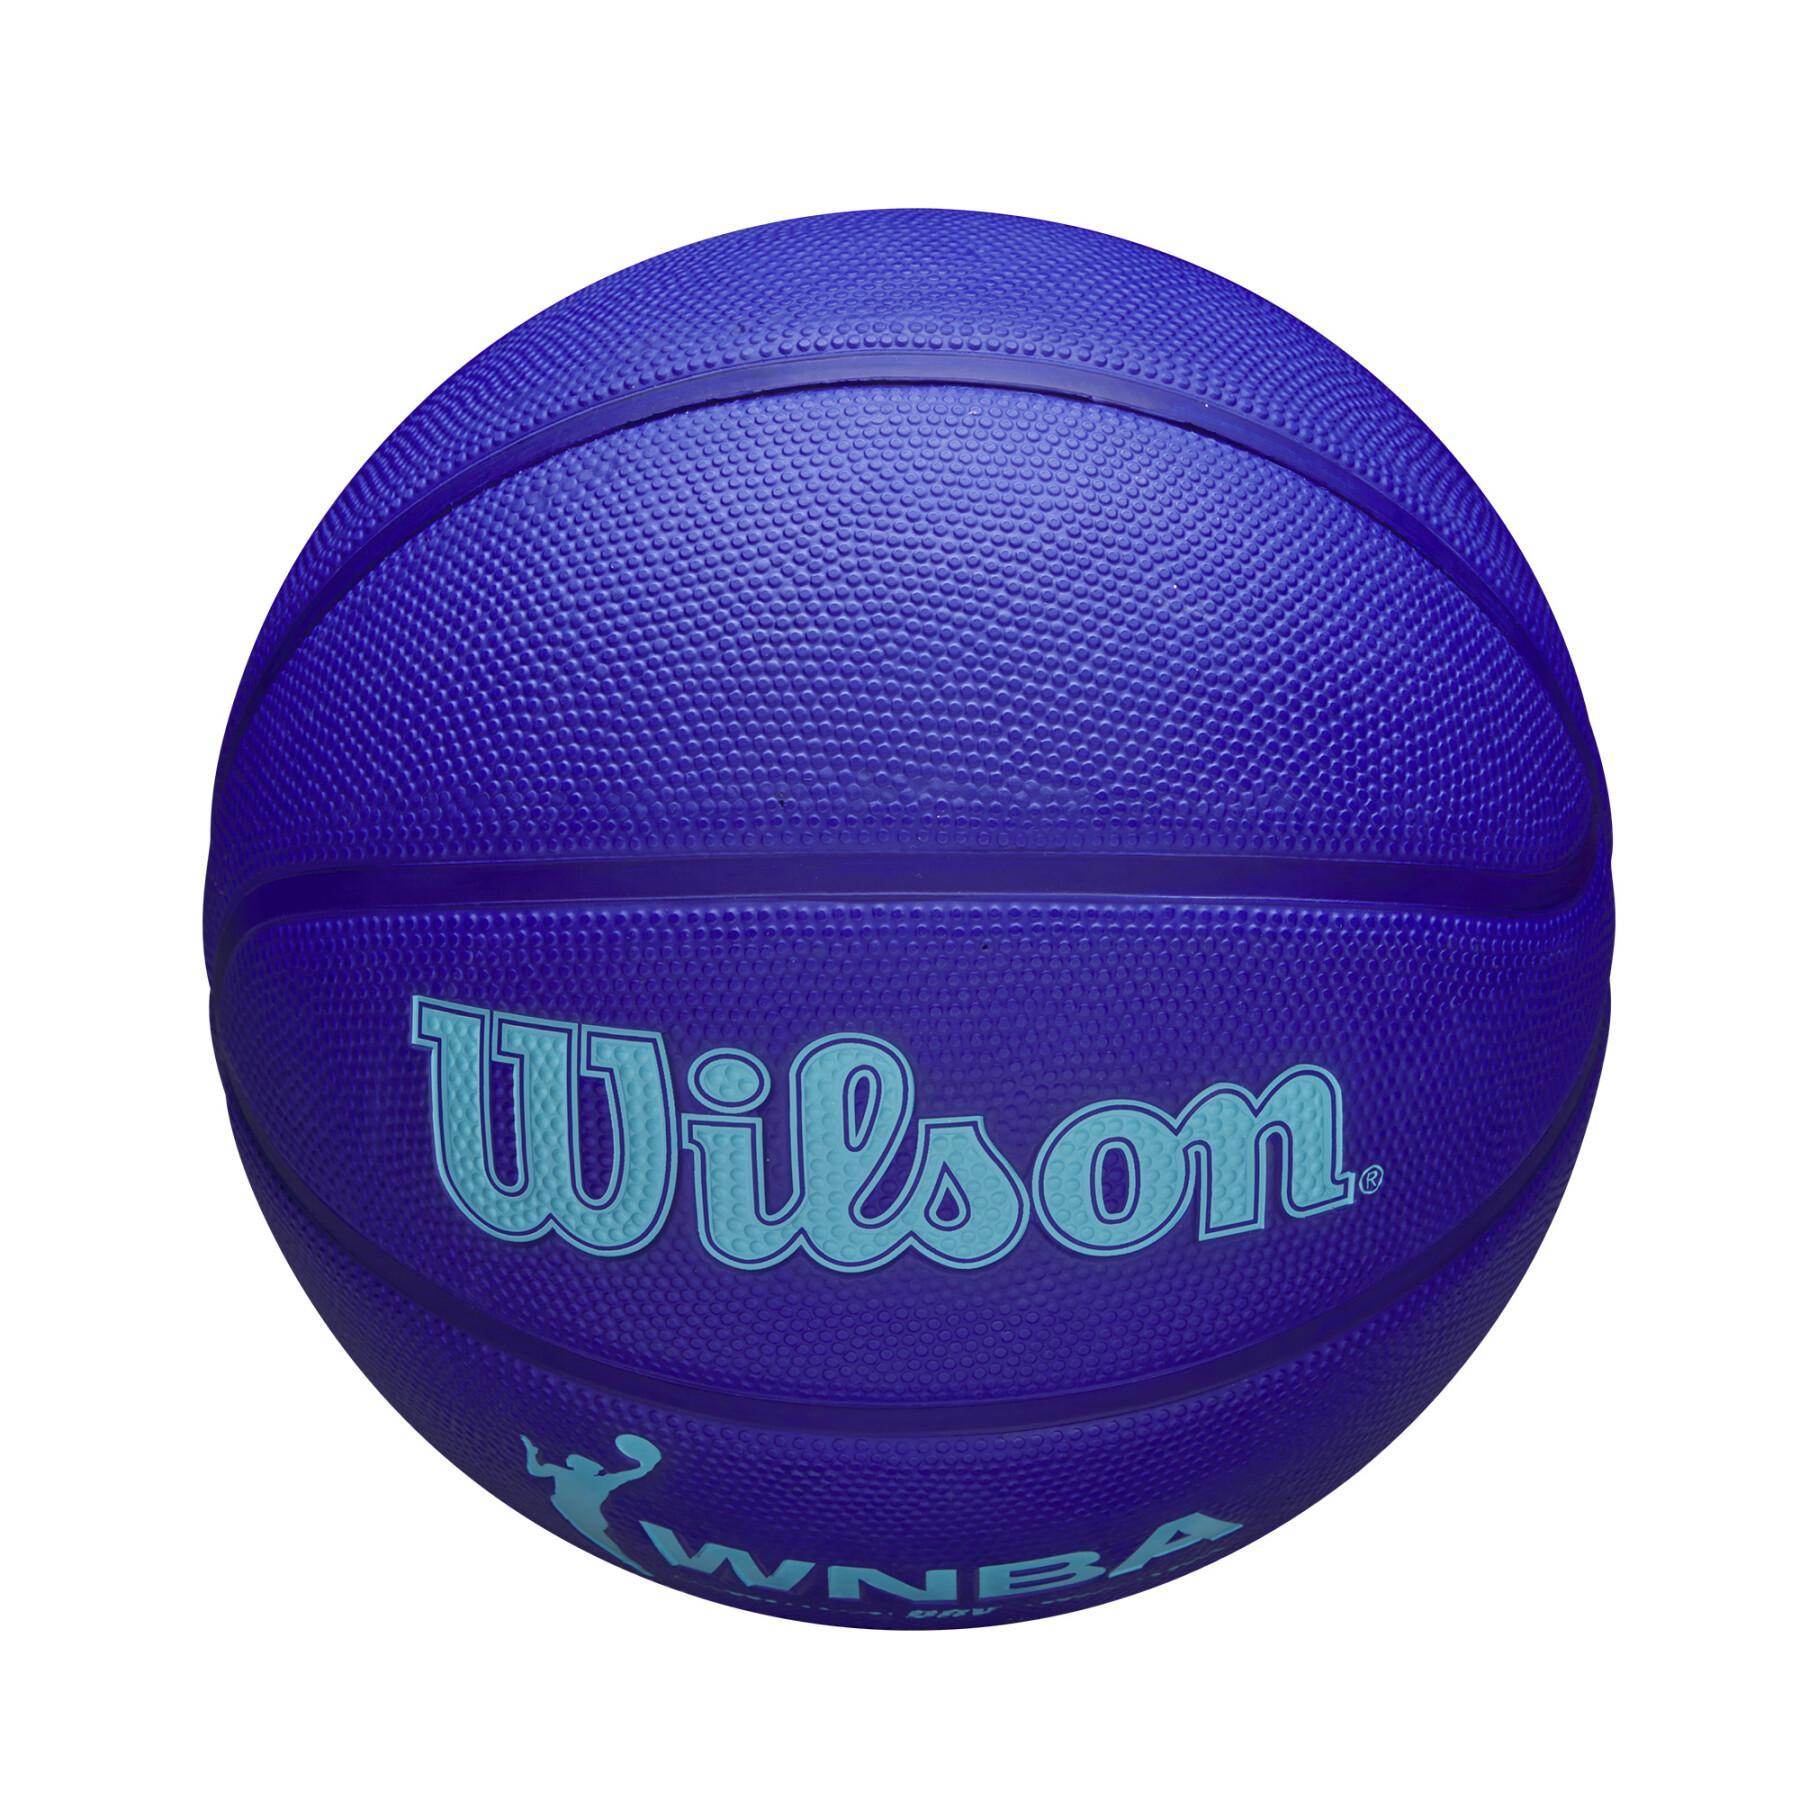 Balão Wilson WNBA Drive